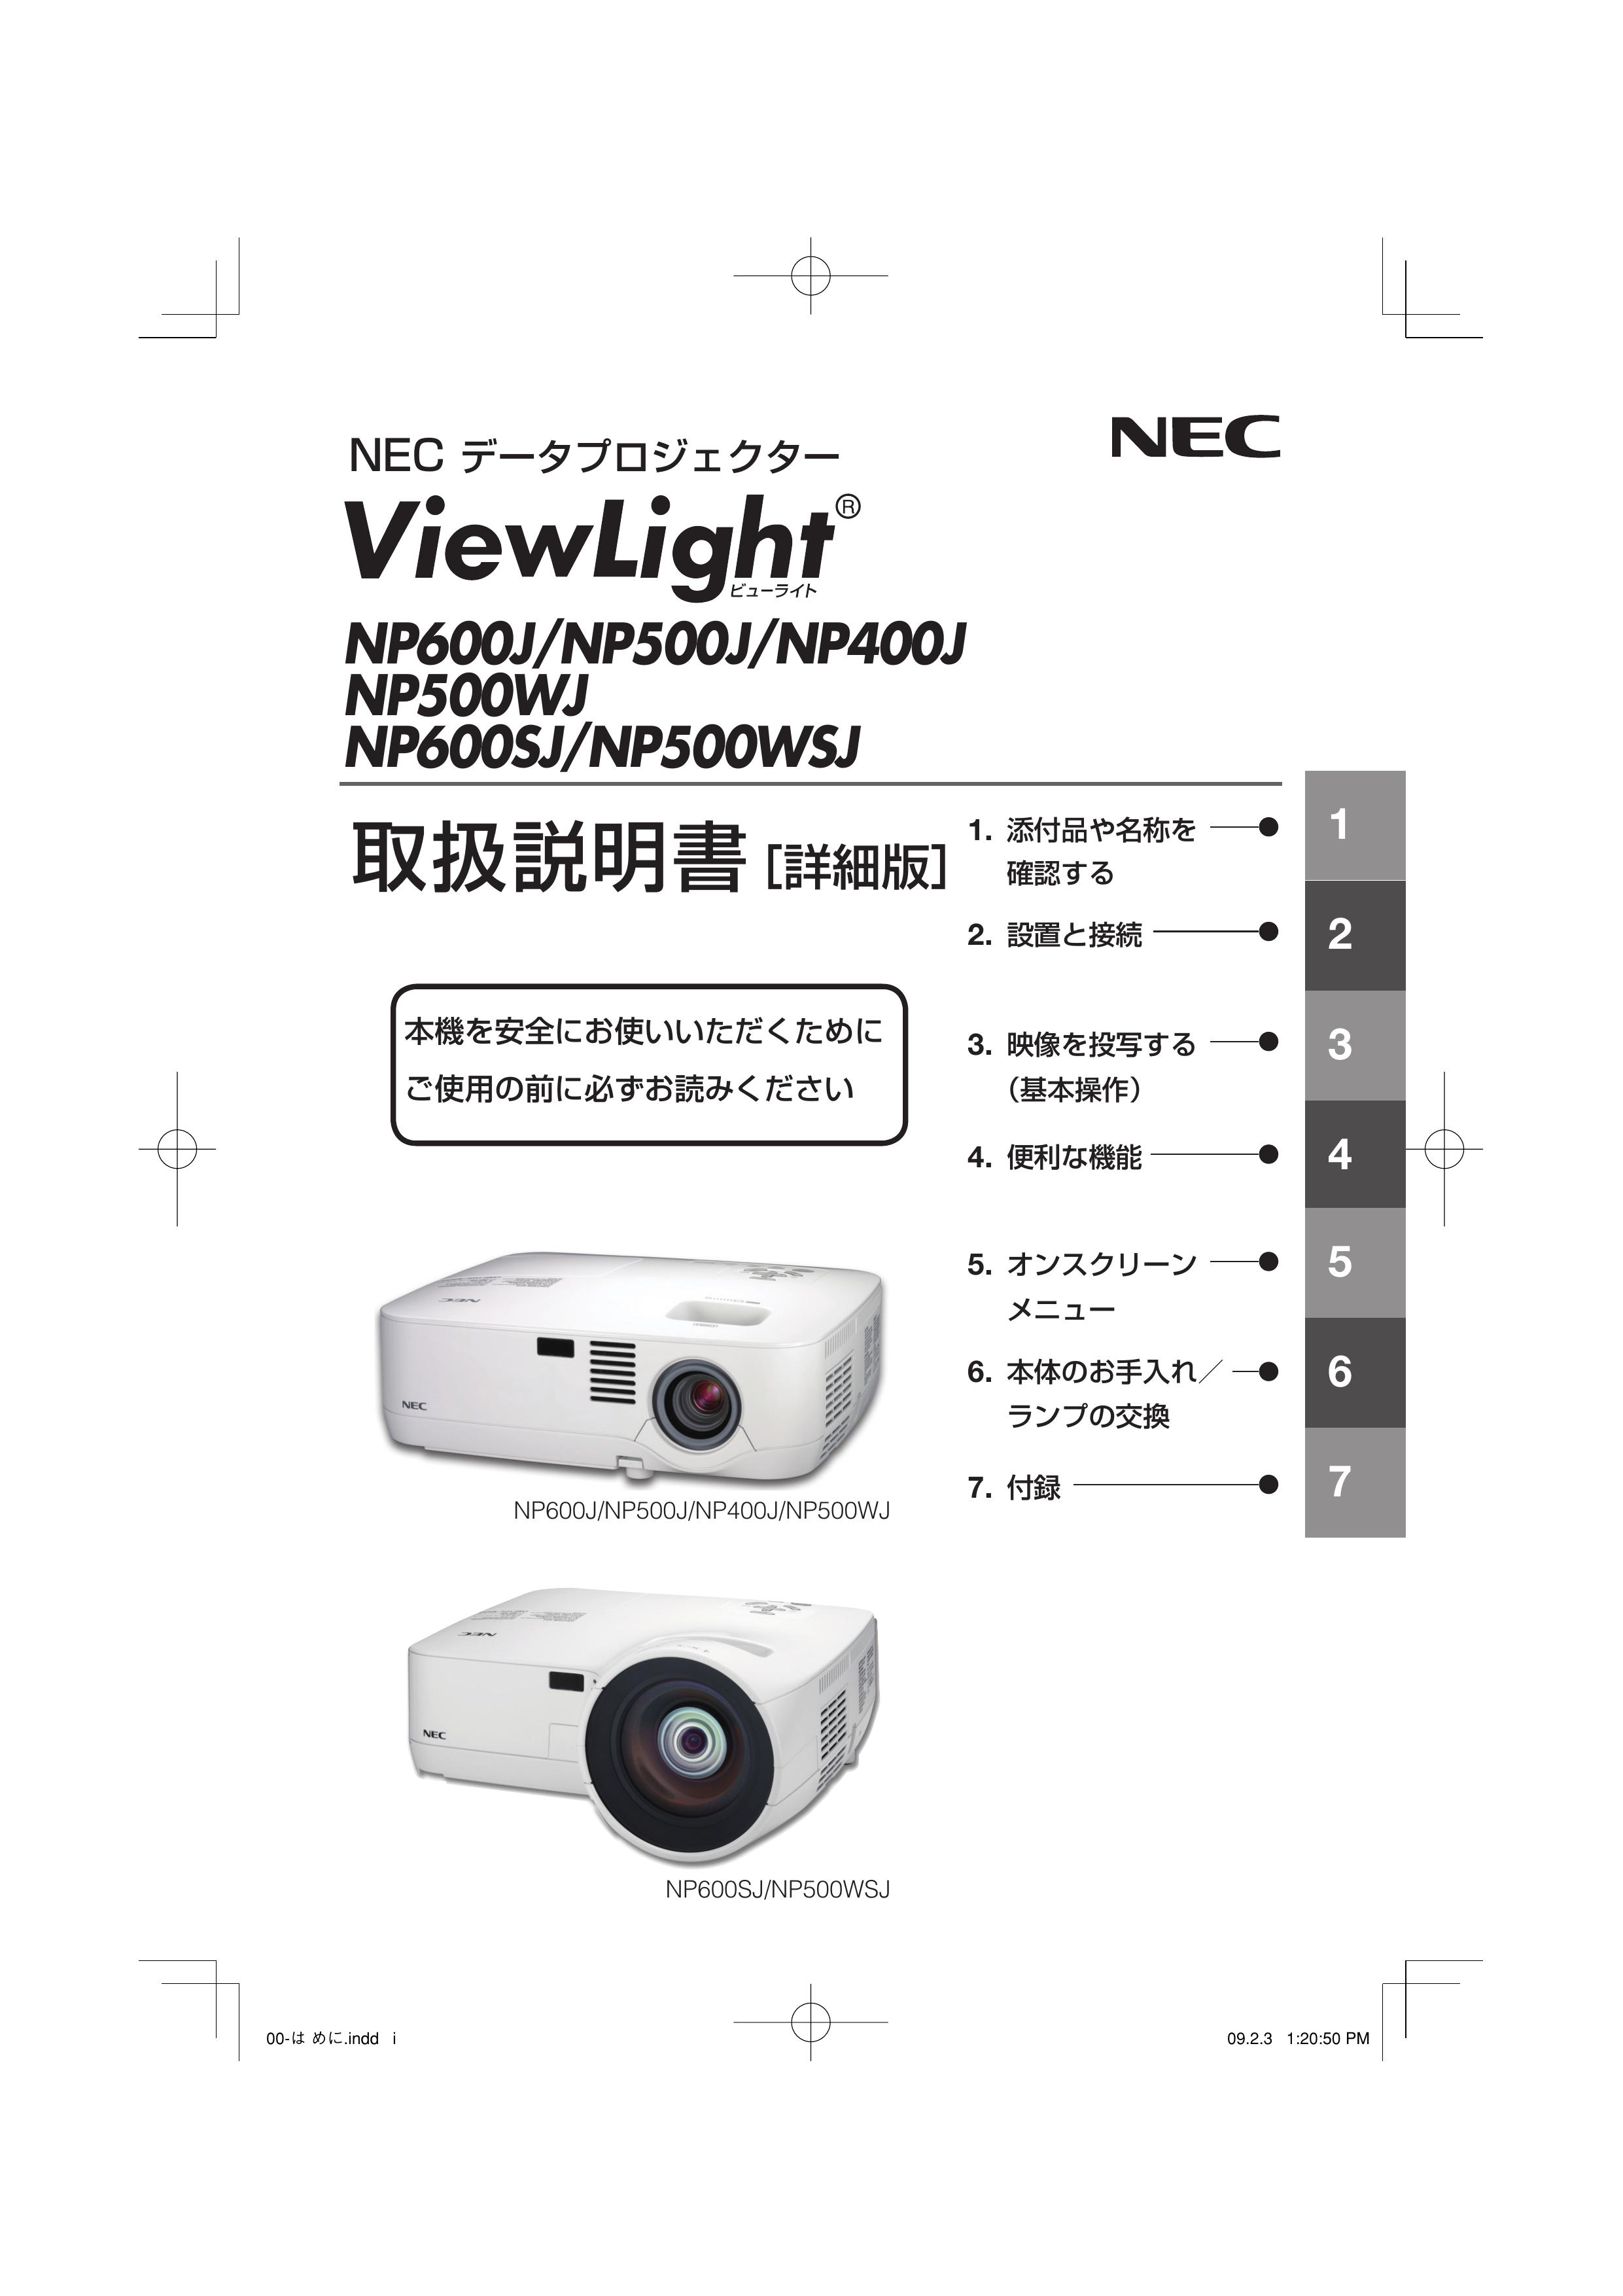 NEC NP500WSJ Microscope & Magnifier User Manual